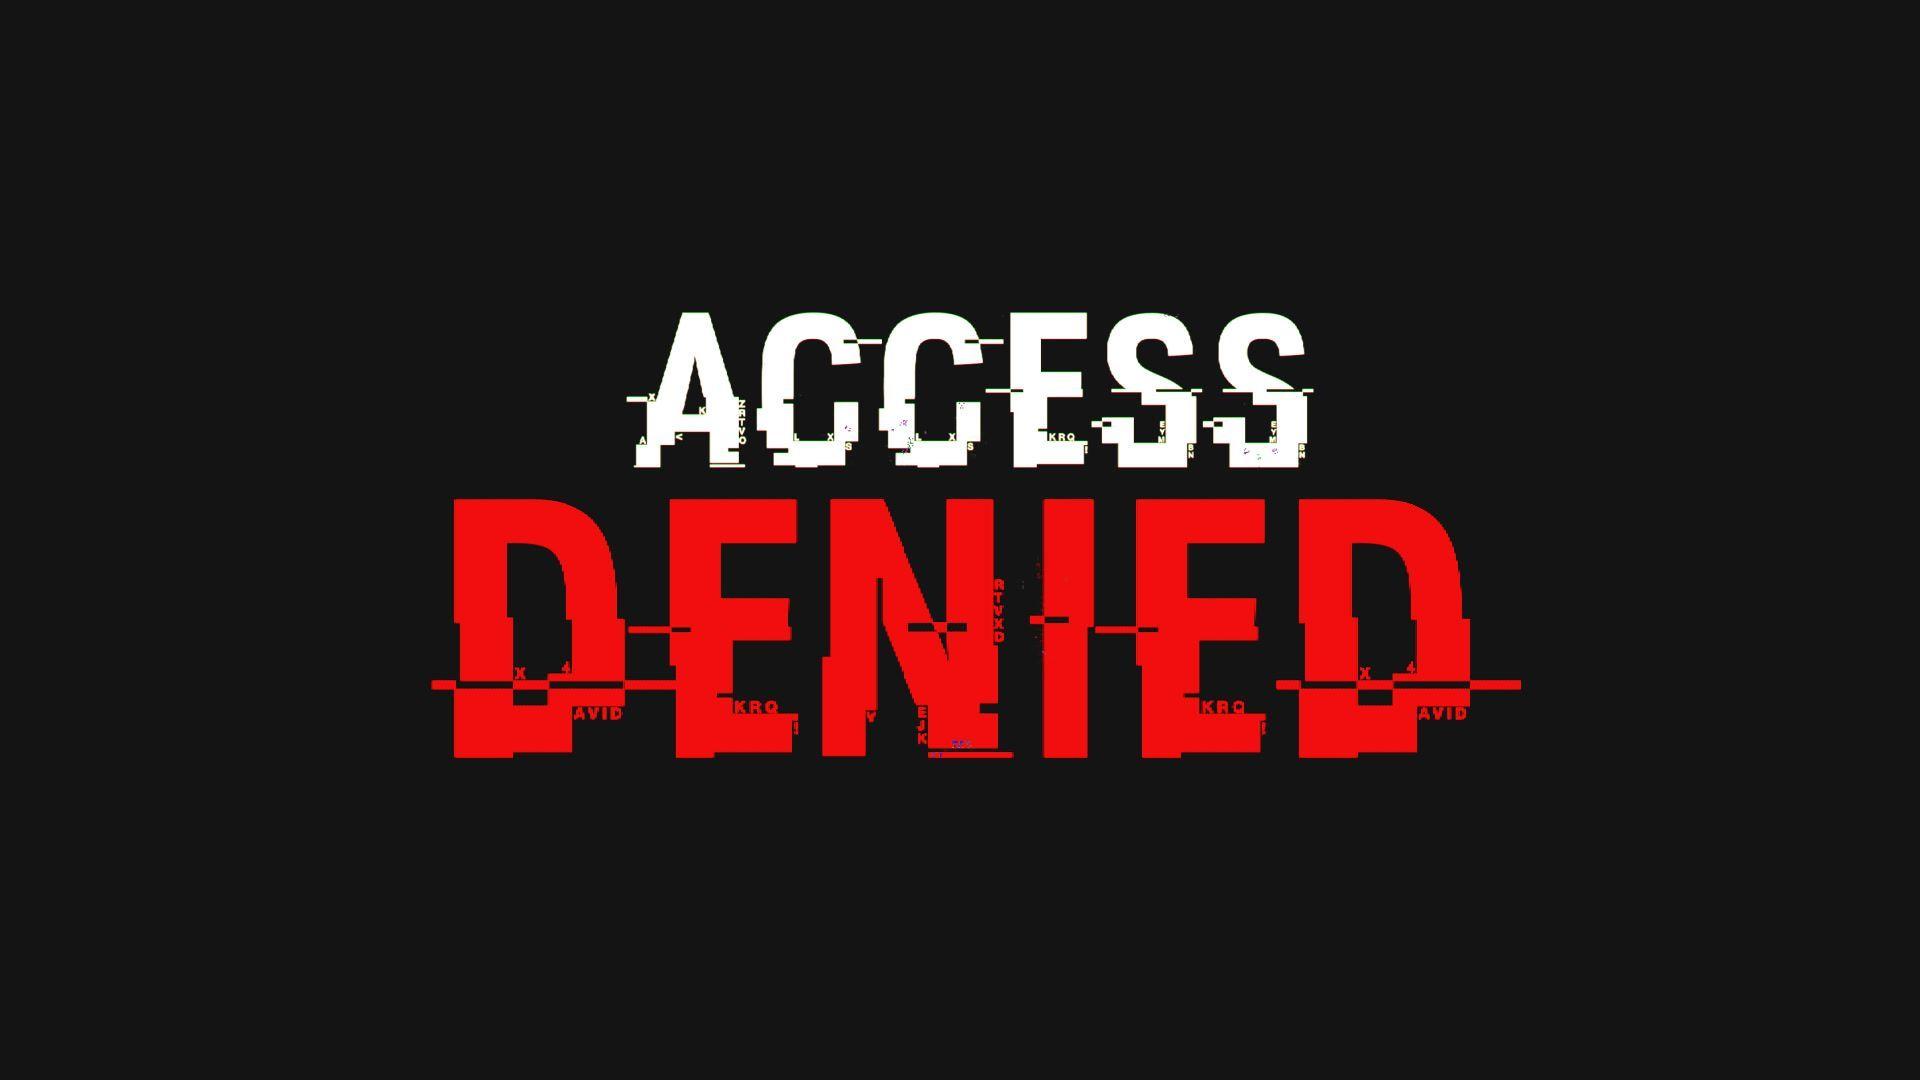 Access rejected. Access denied. Access denied картинки. Access is denied. Логотип access.